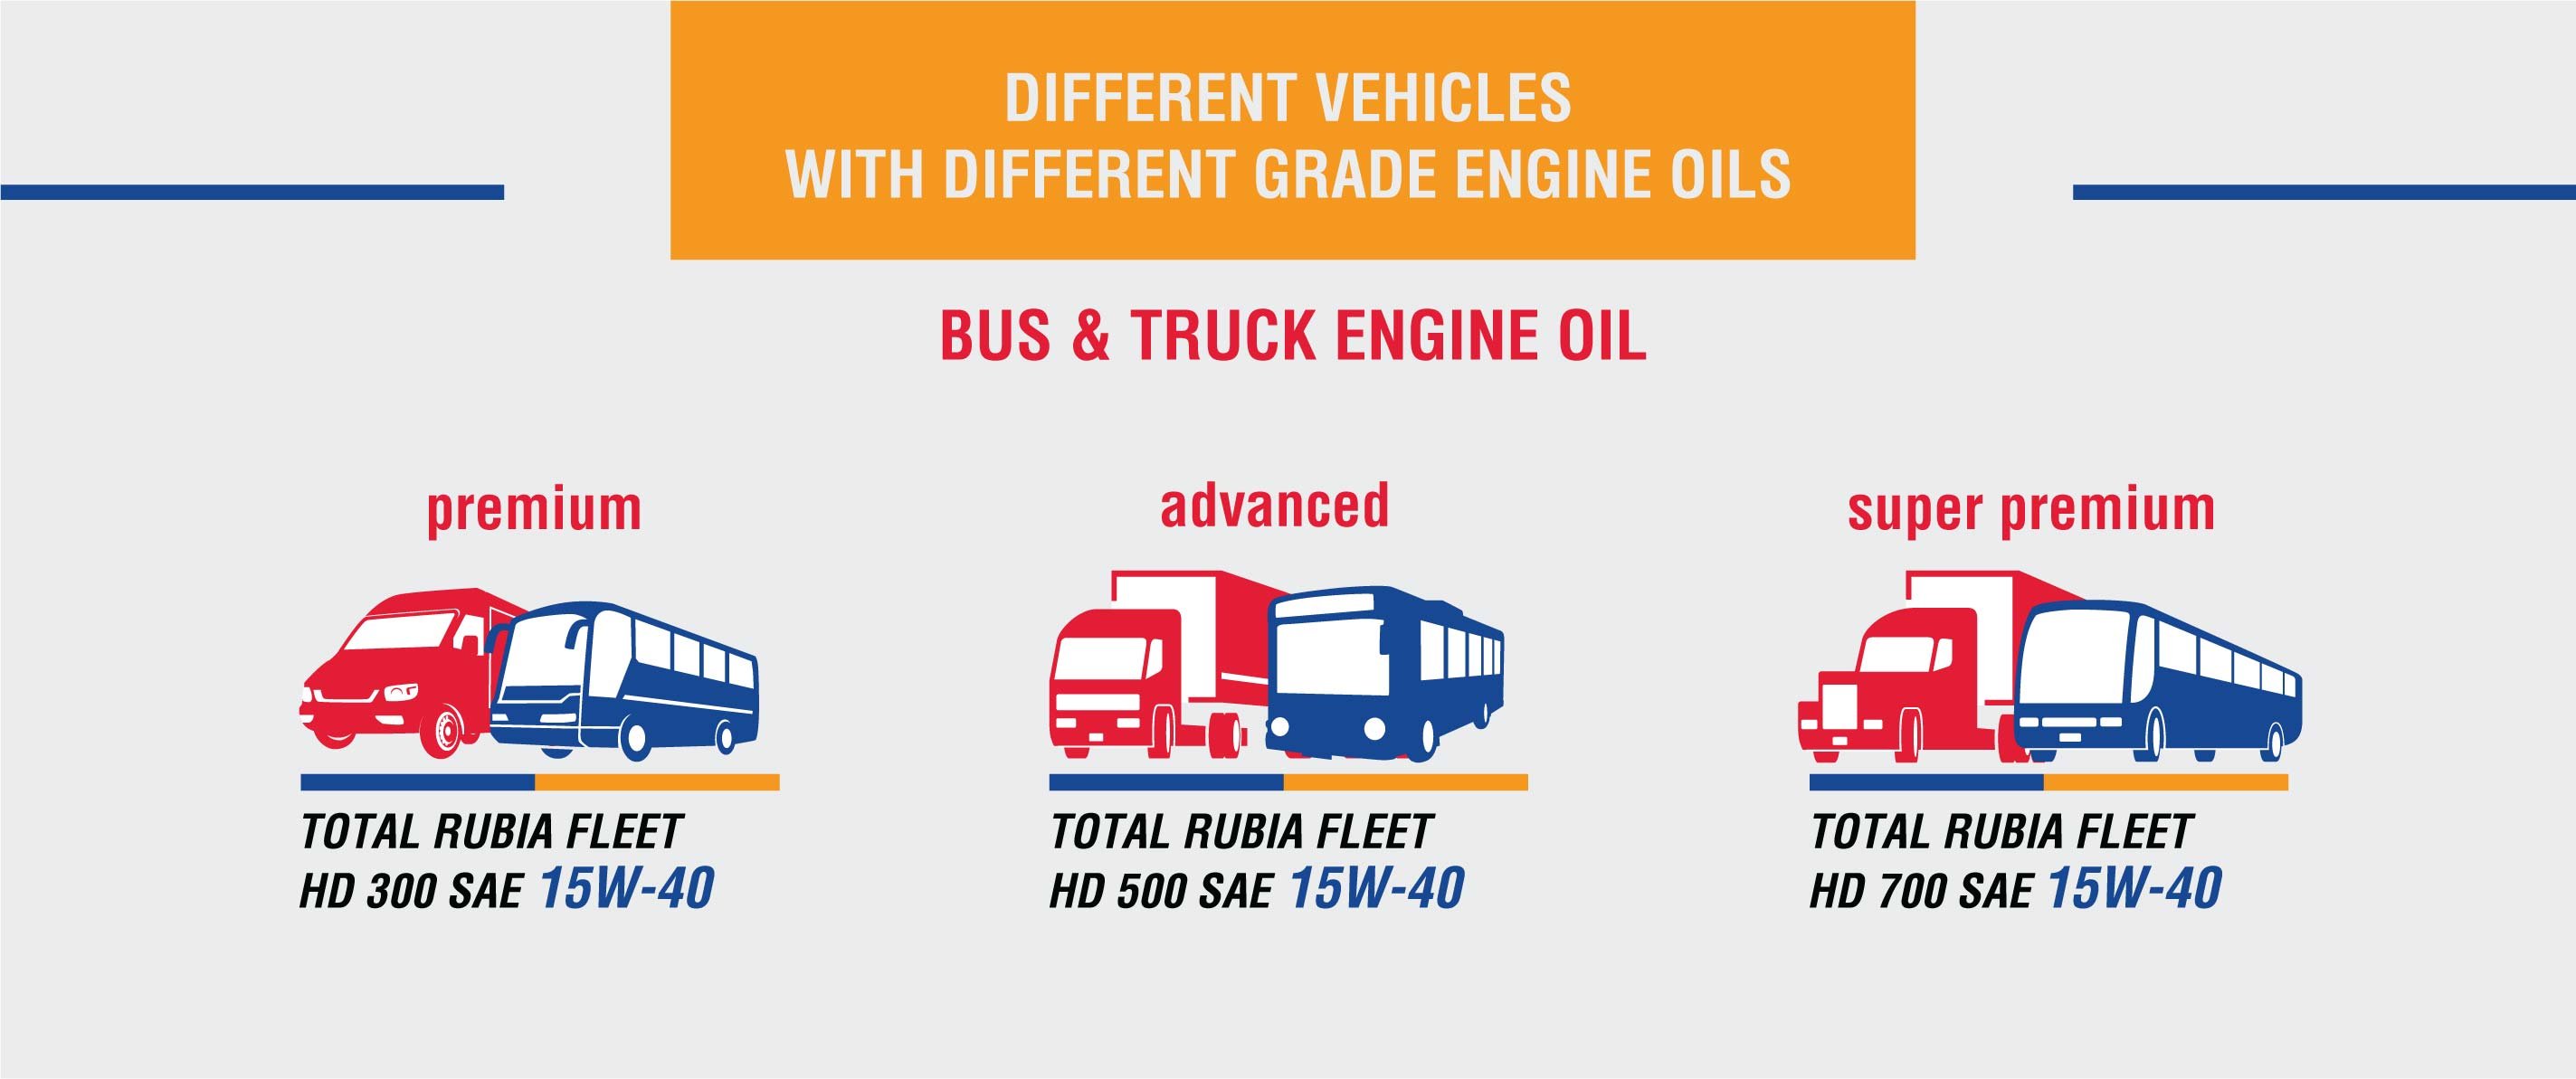 heavy duty vehicle engine oil grades